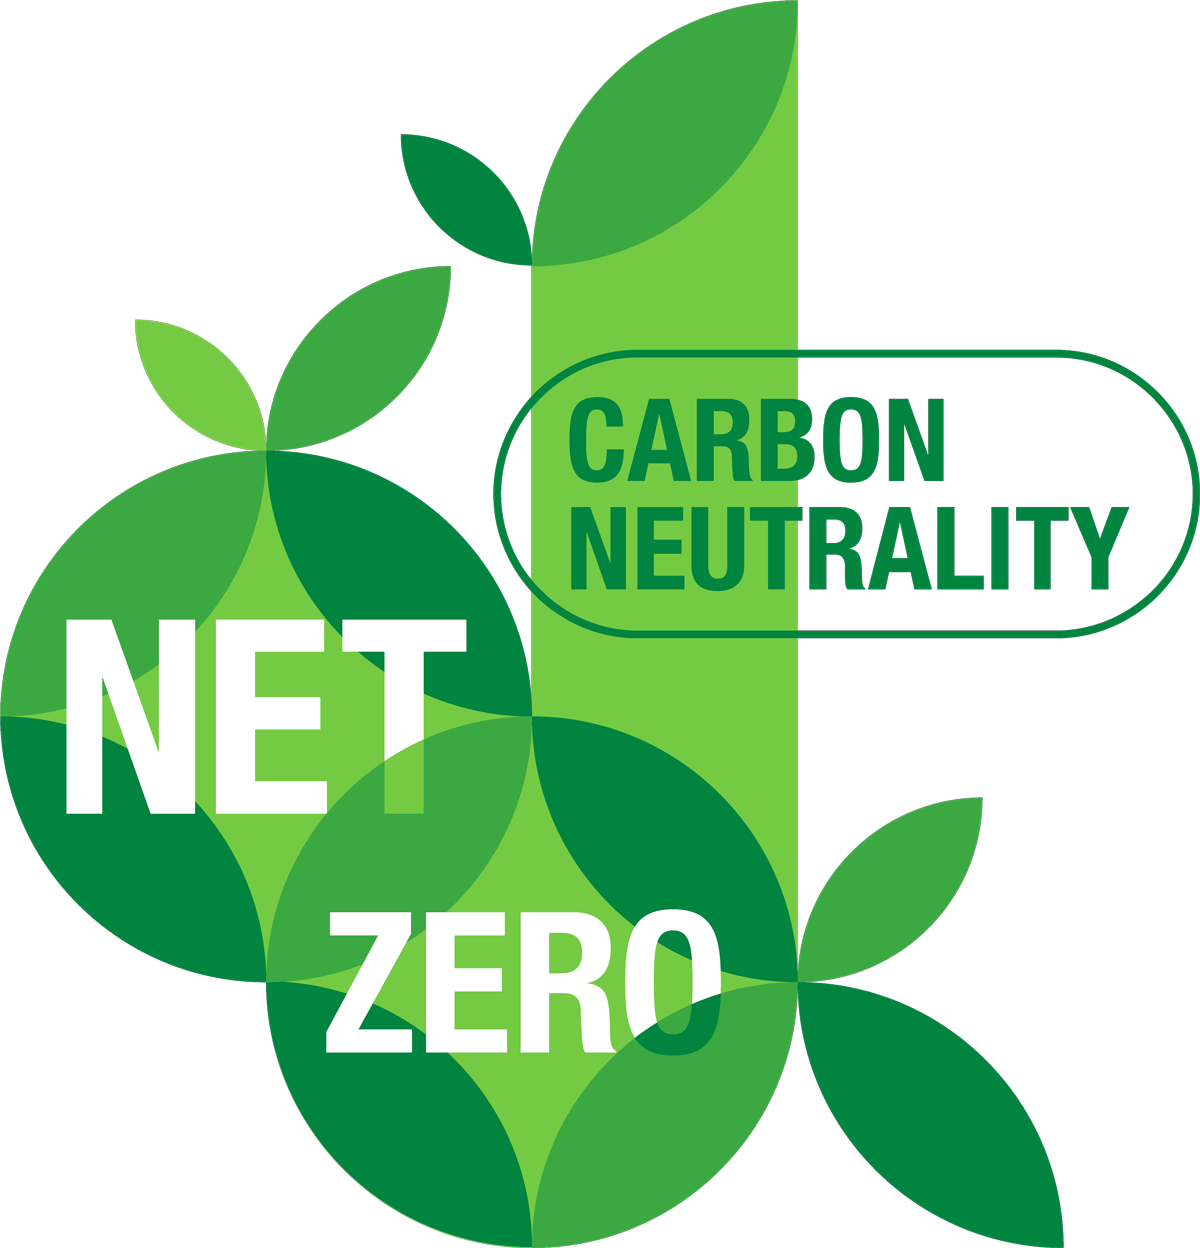 Net Zero Carbon Neutrality